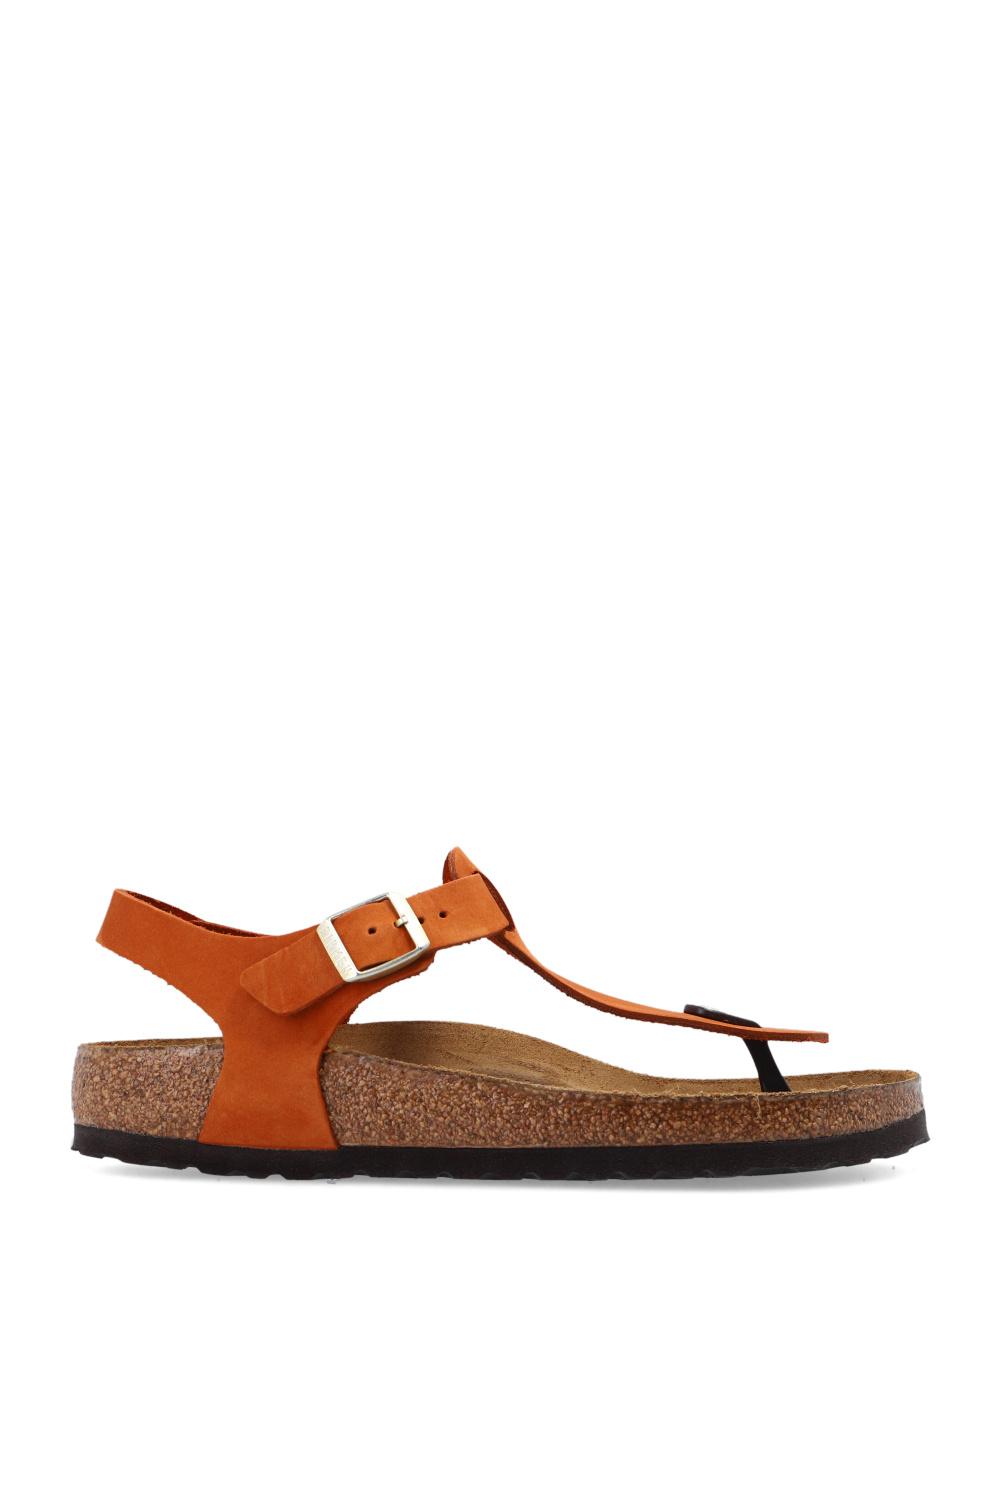 Birkenstock Leather 'kairo' Sandals in Orange | Lyst